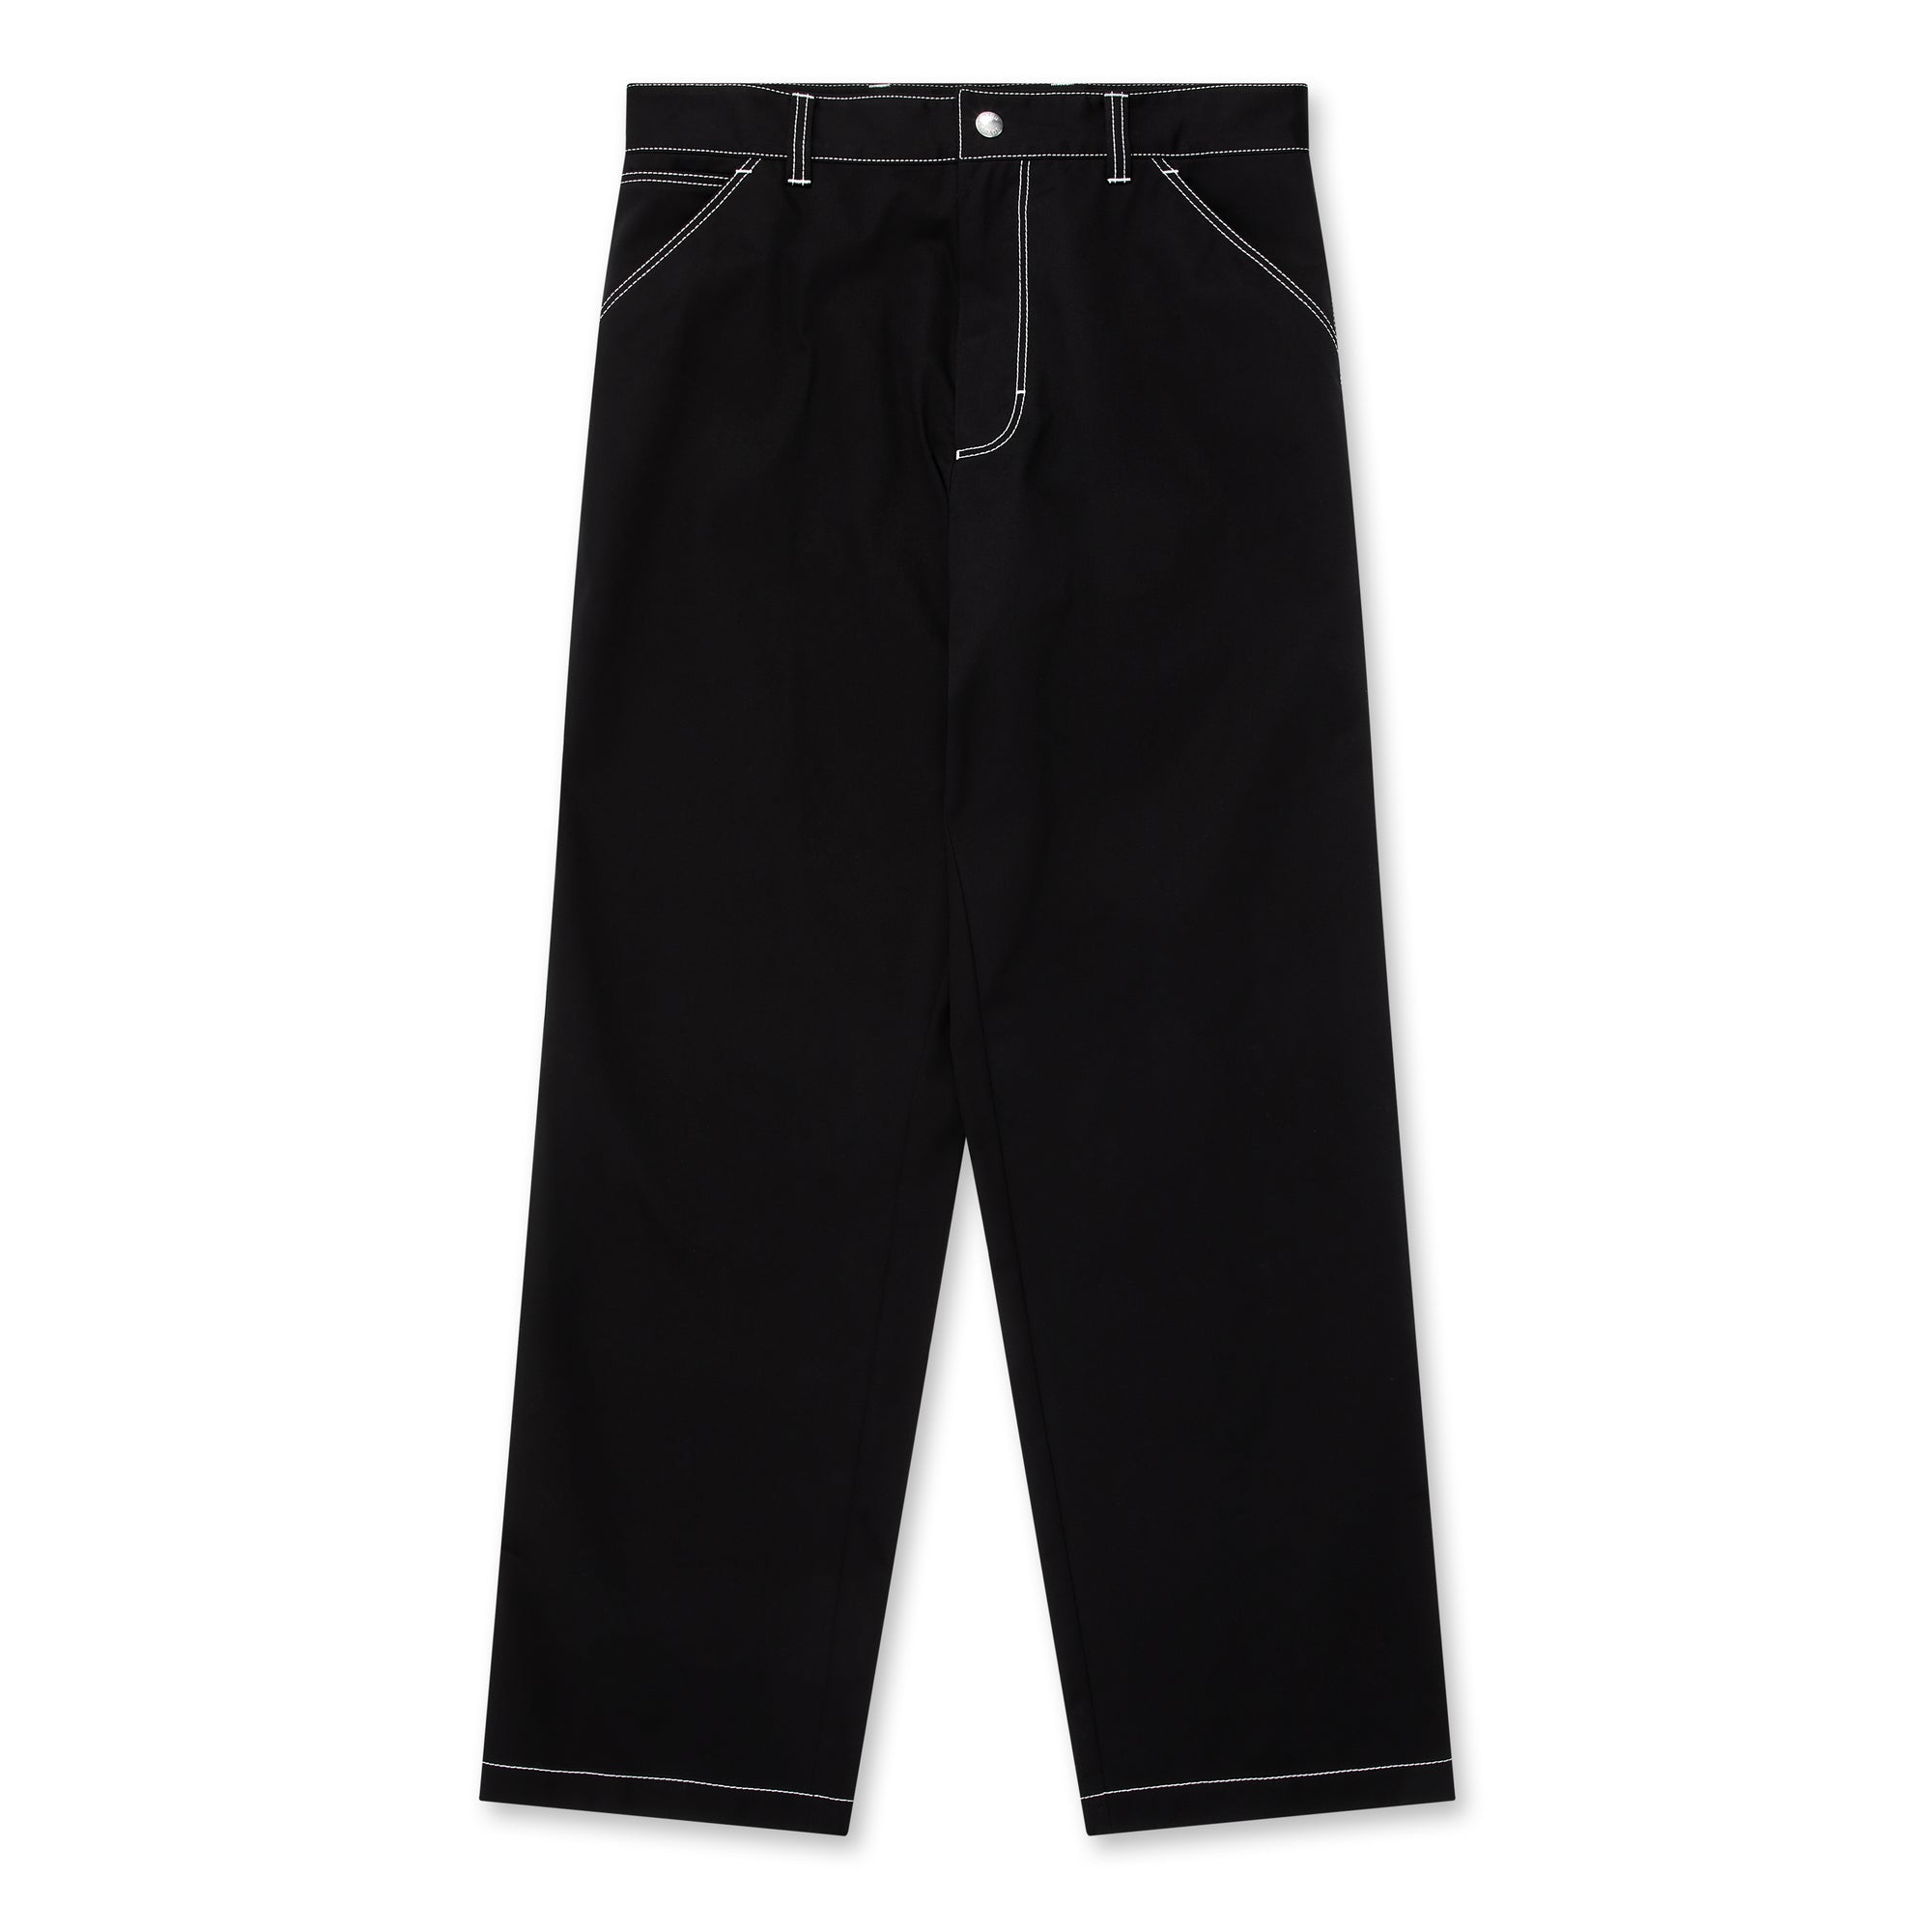 Prada - Men’s Contrast Stitch Trousers - (Black) view 5